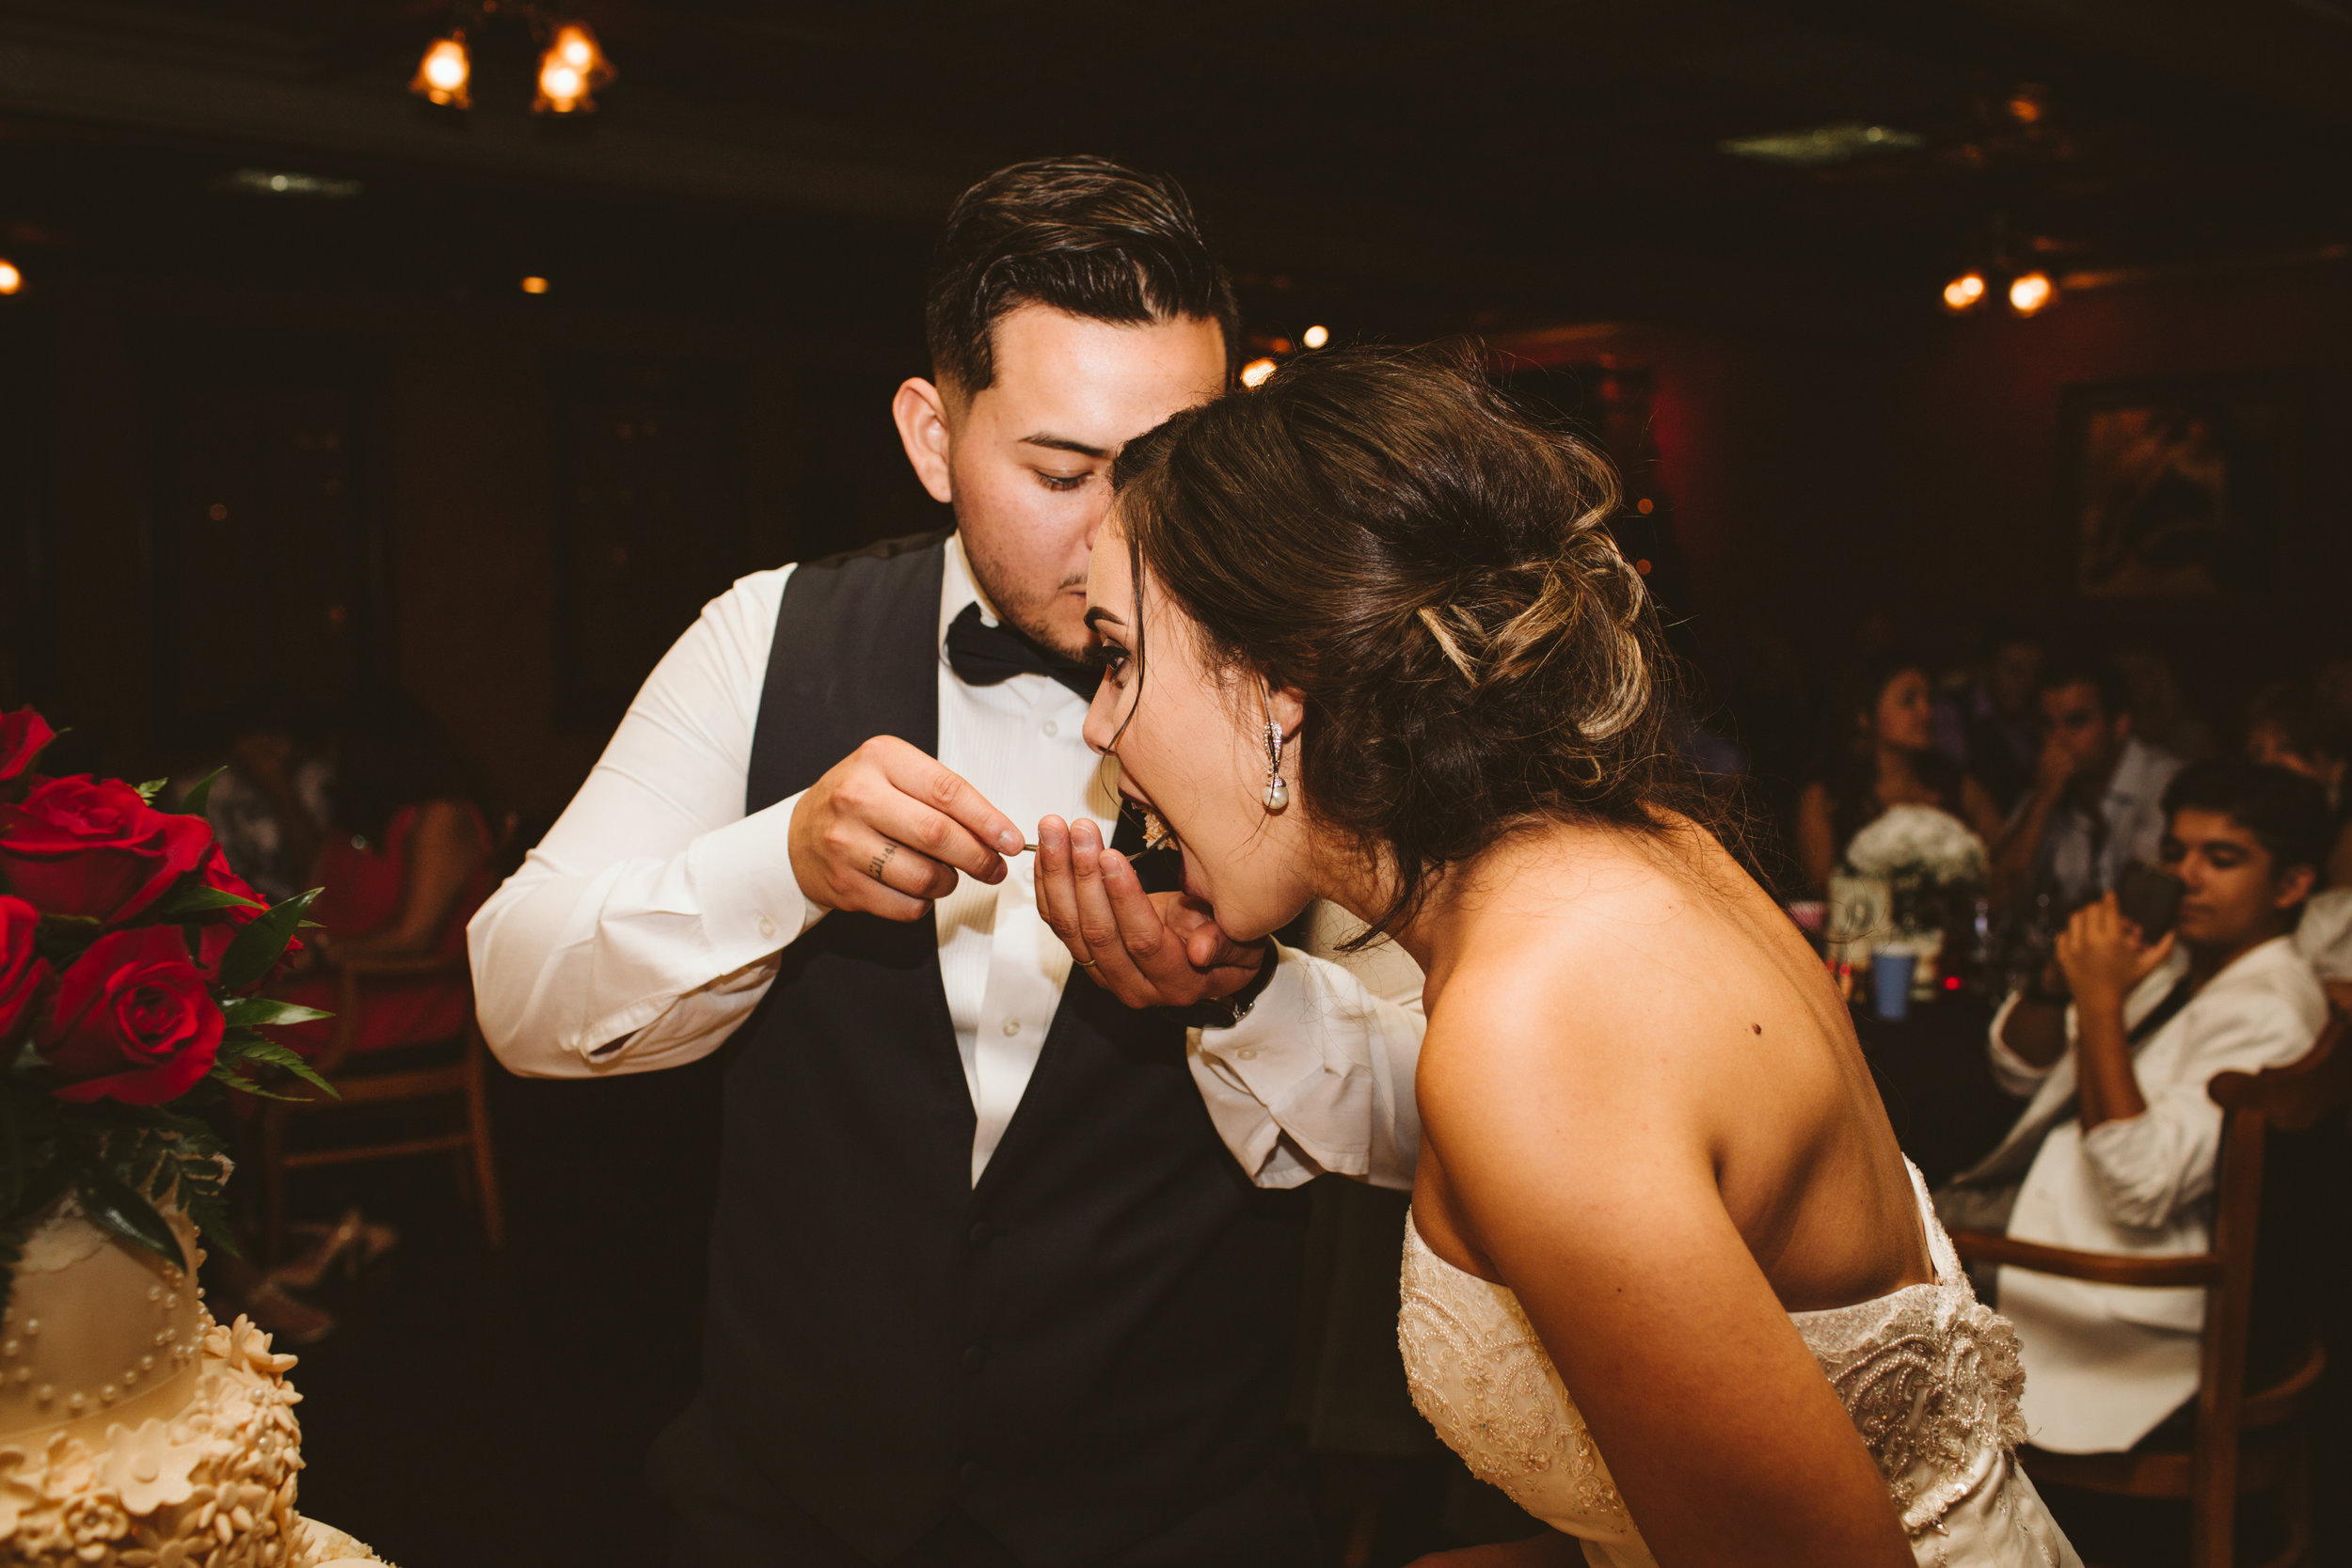 Ceviche Orlando | Wedding Photography | Vanessa Boy | vanessaboy.com |-642.com |final.jpg